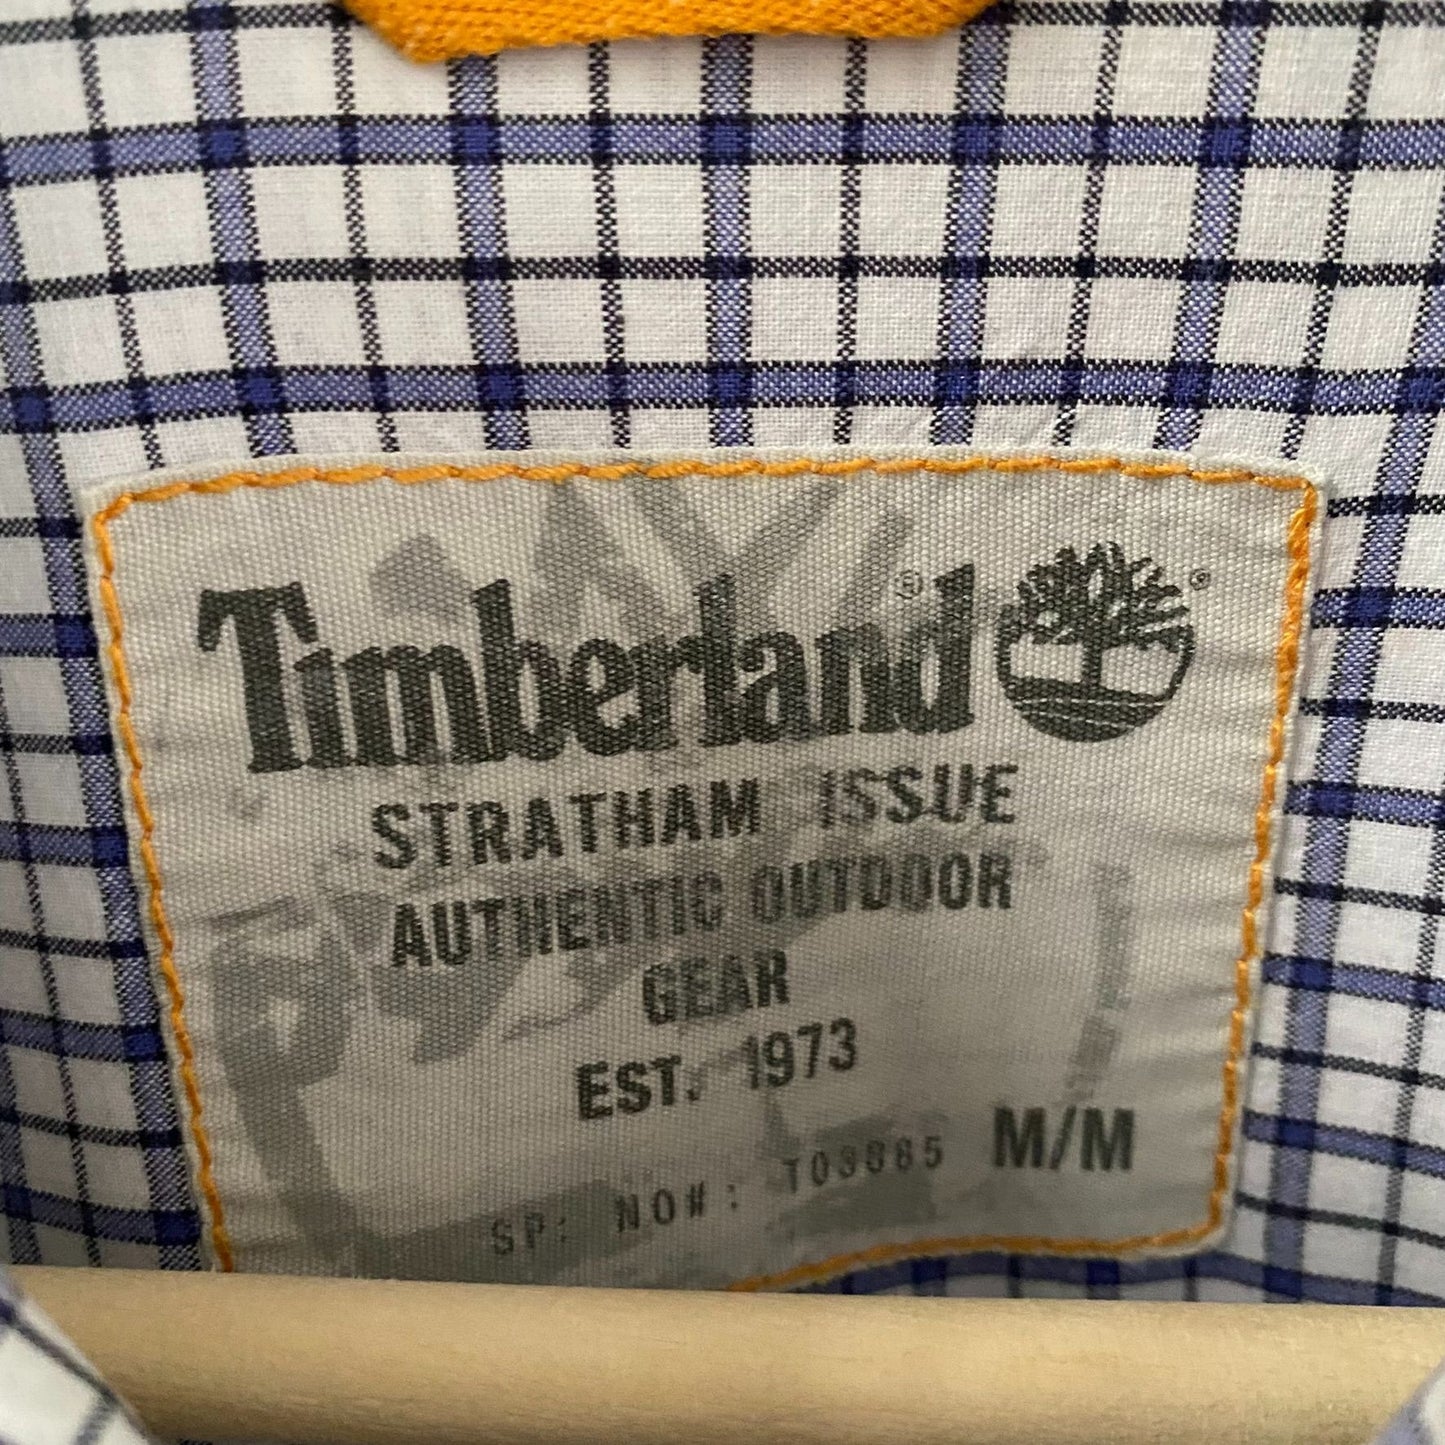 Timberland Blue Plaid L/S Shirt